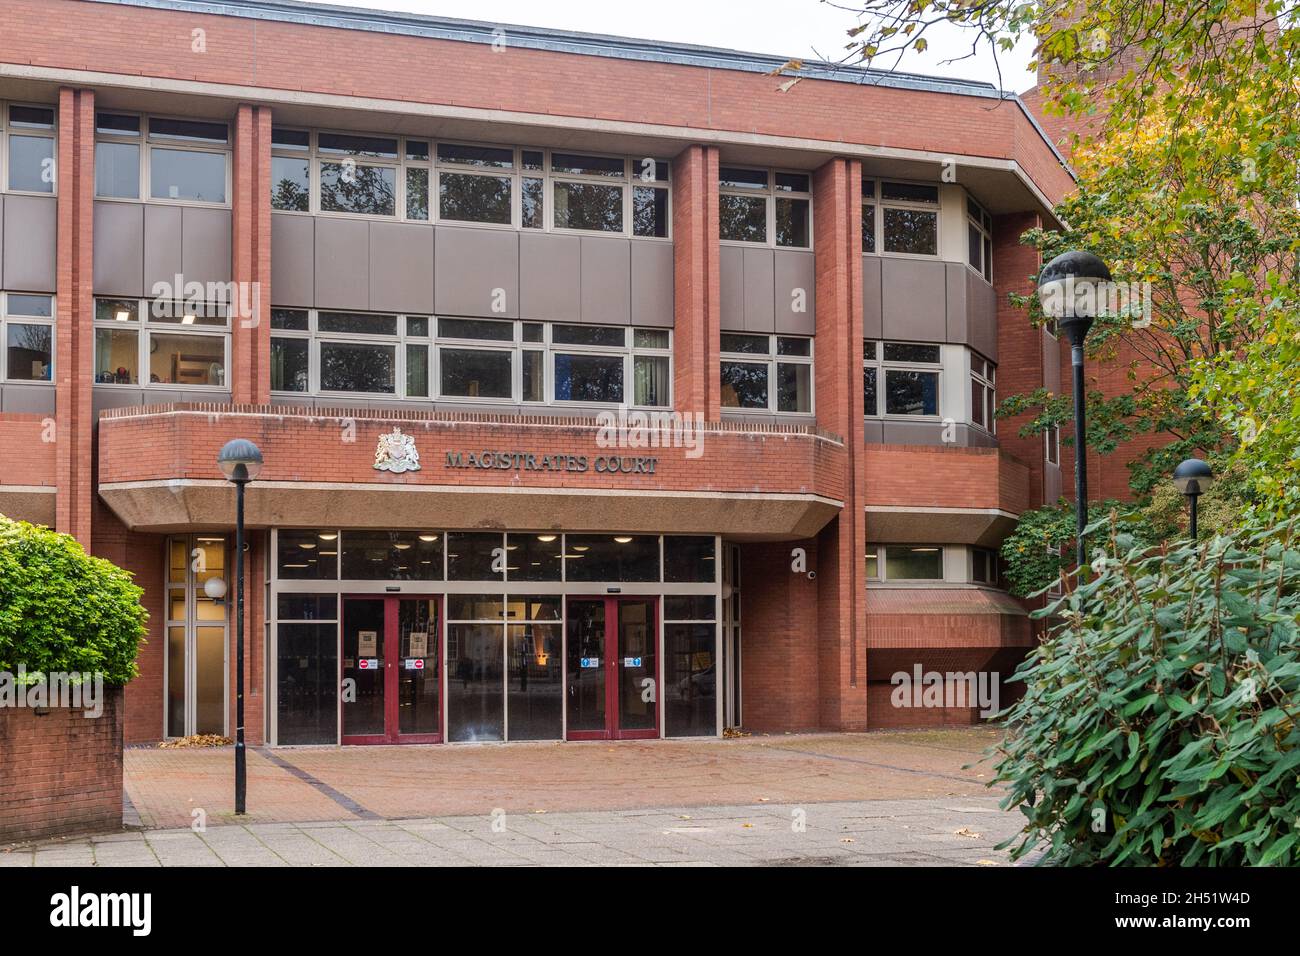 Magistrates Court, Coventry, West Midlands, Regno Unito. Foto Stock